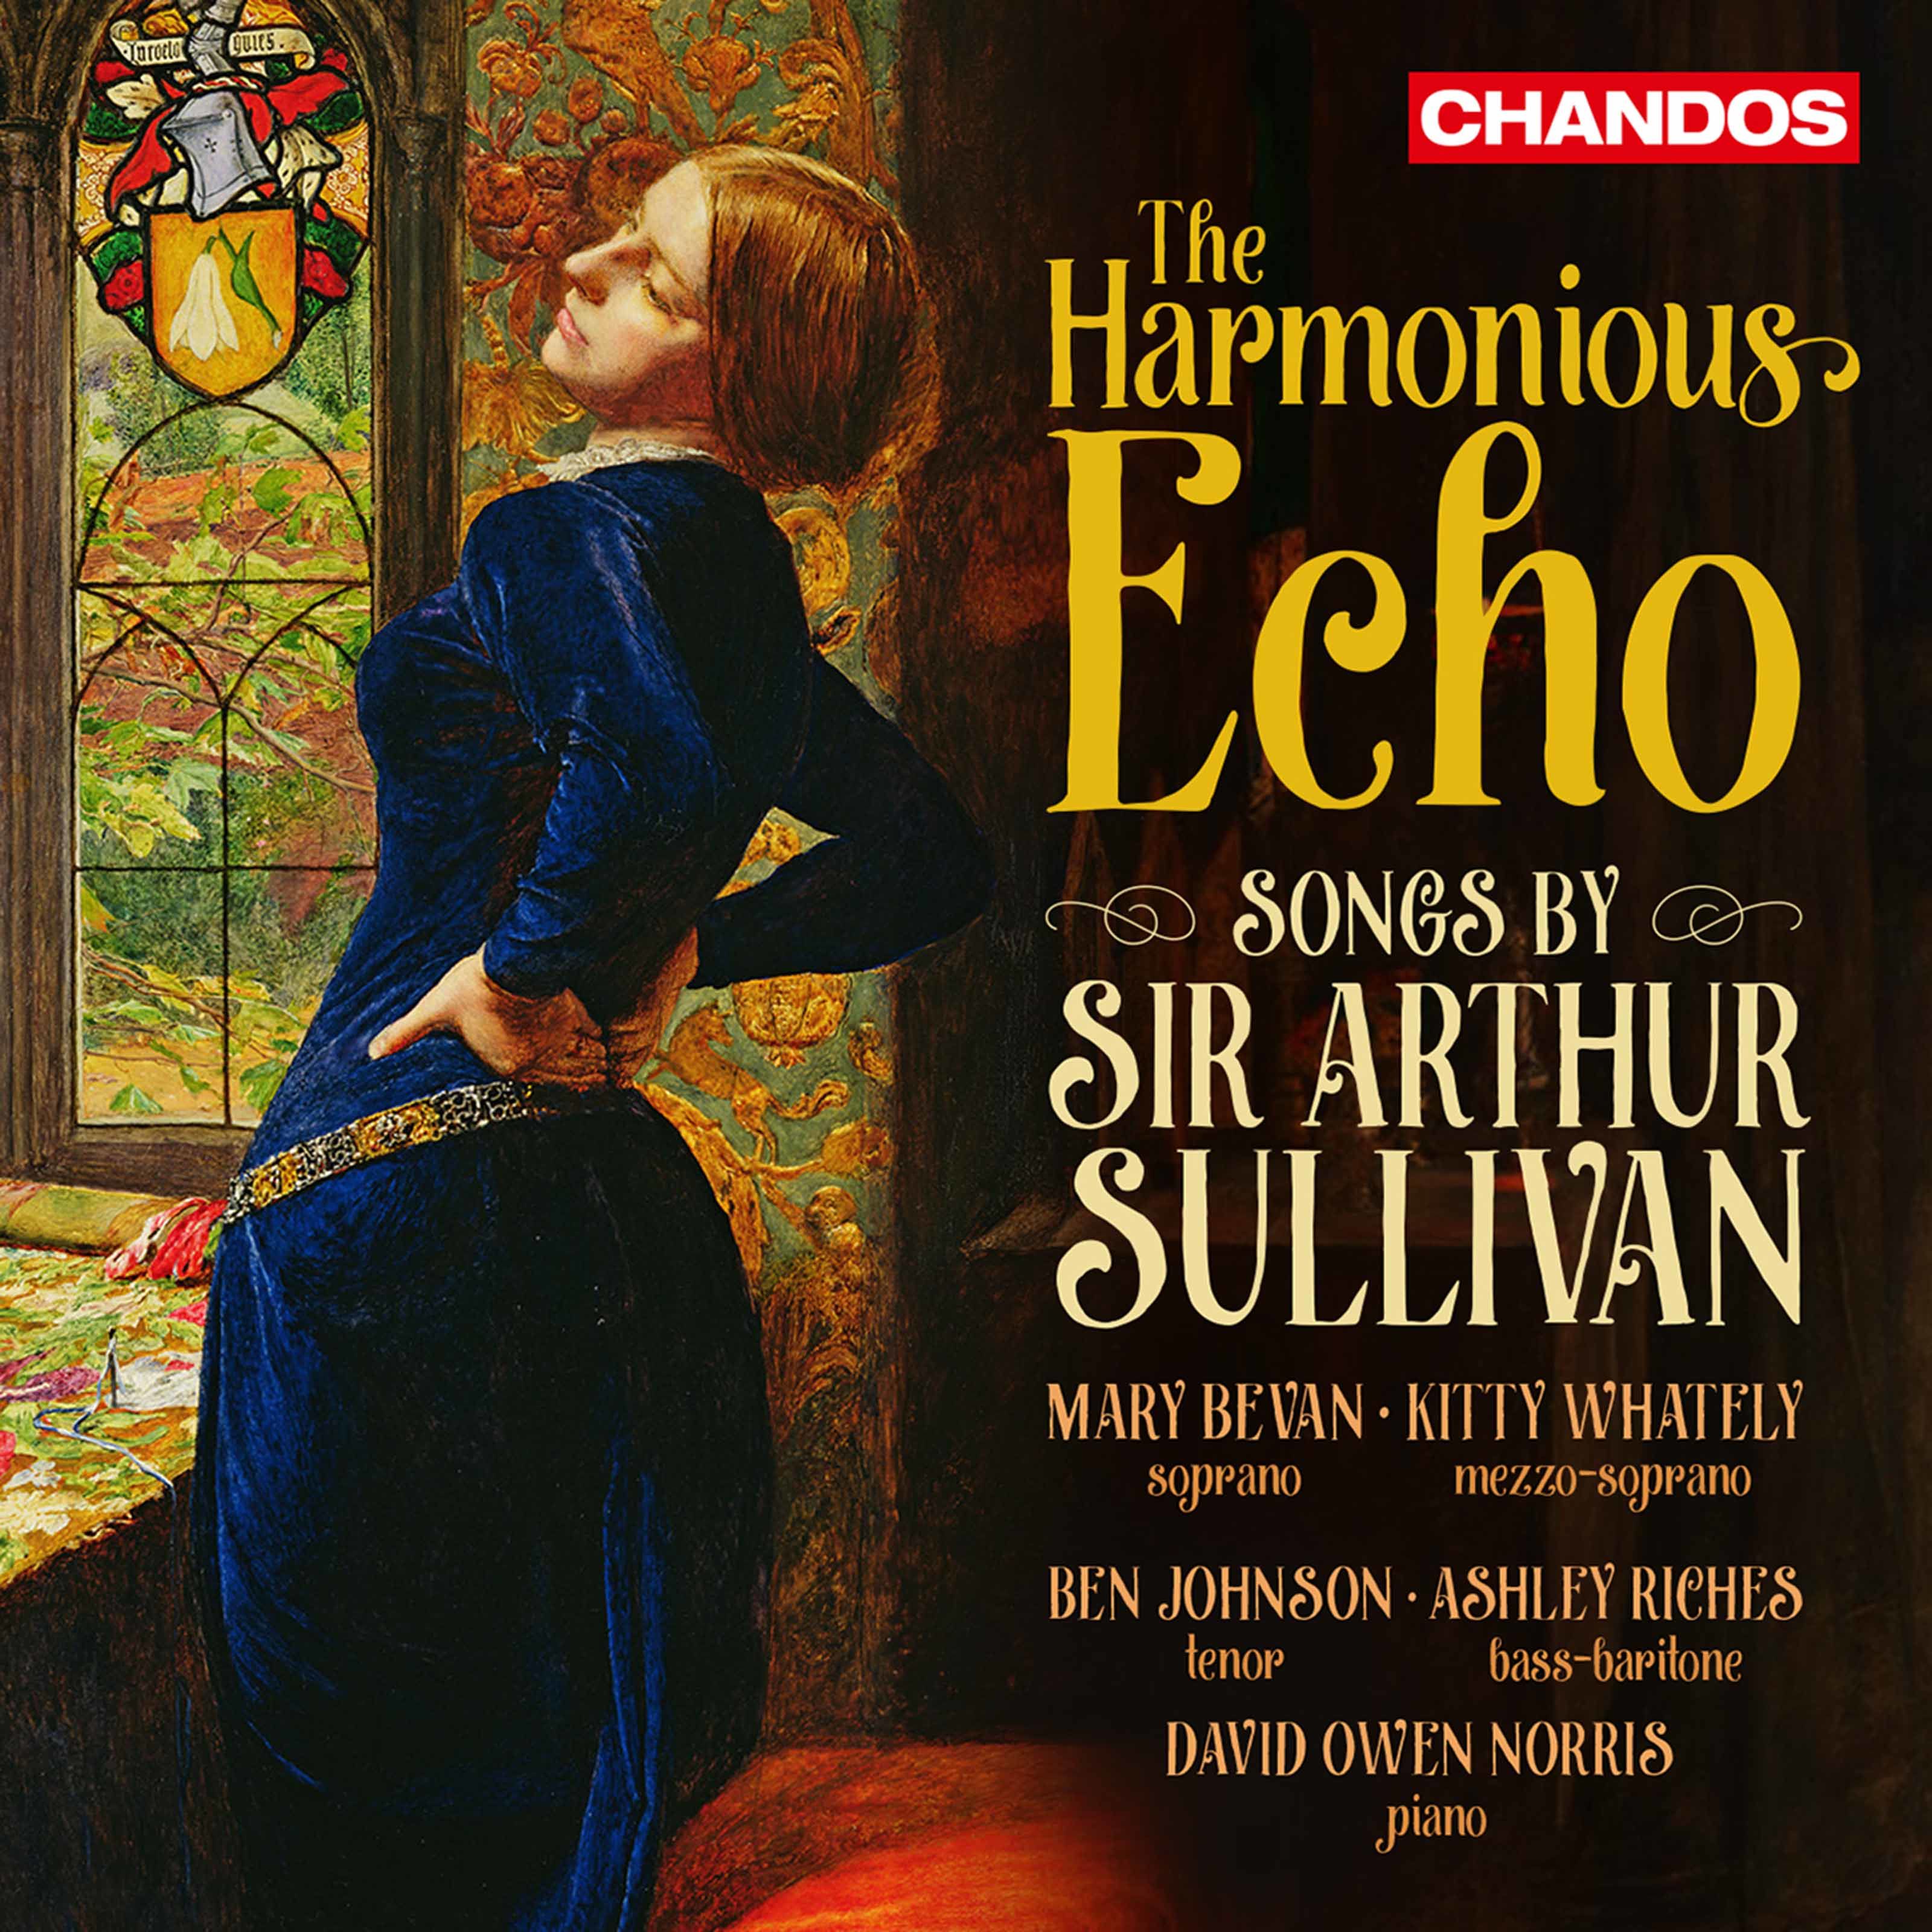 Ashley Riches - The Harmonious Echo - Songs by Sir Arthur Sullivan (2021) [FLAC 24bit/96kHz]